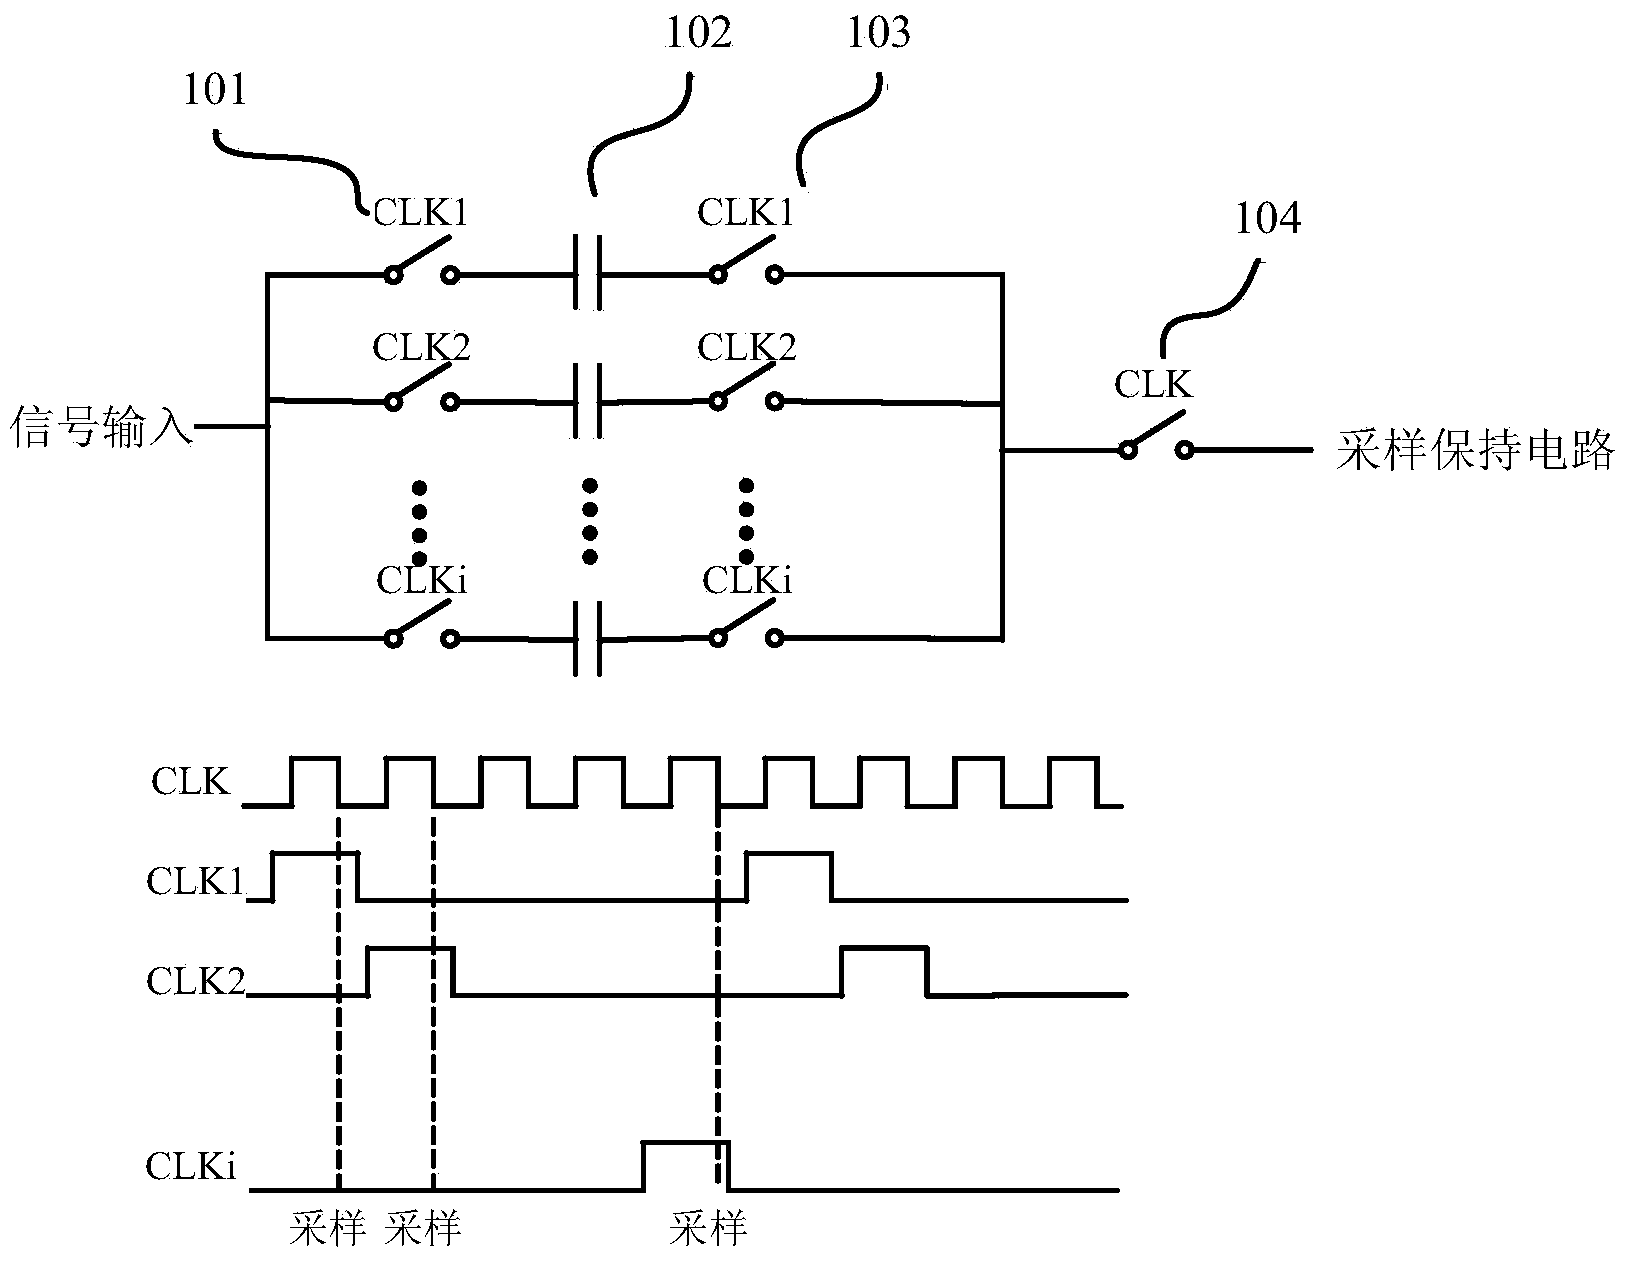 Sampling clock generation circuit for multichannel time interleaving analog-digital converter